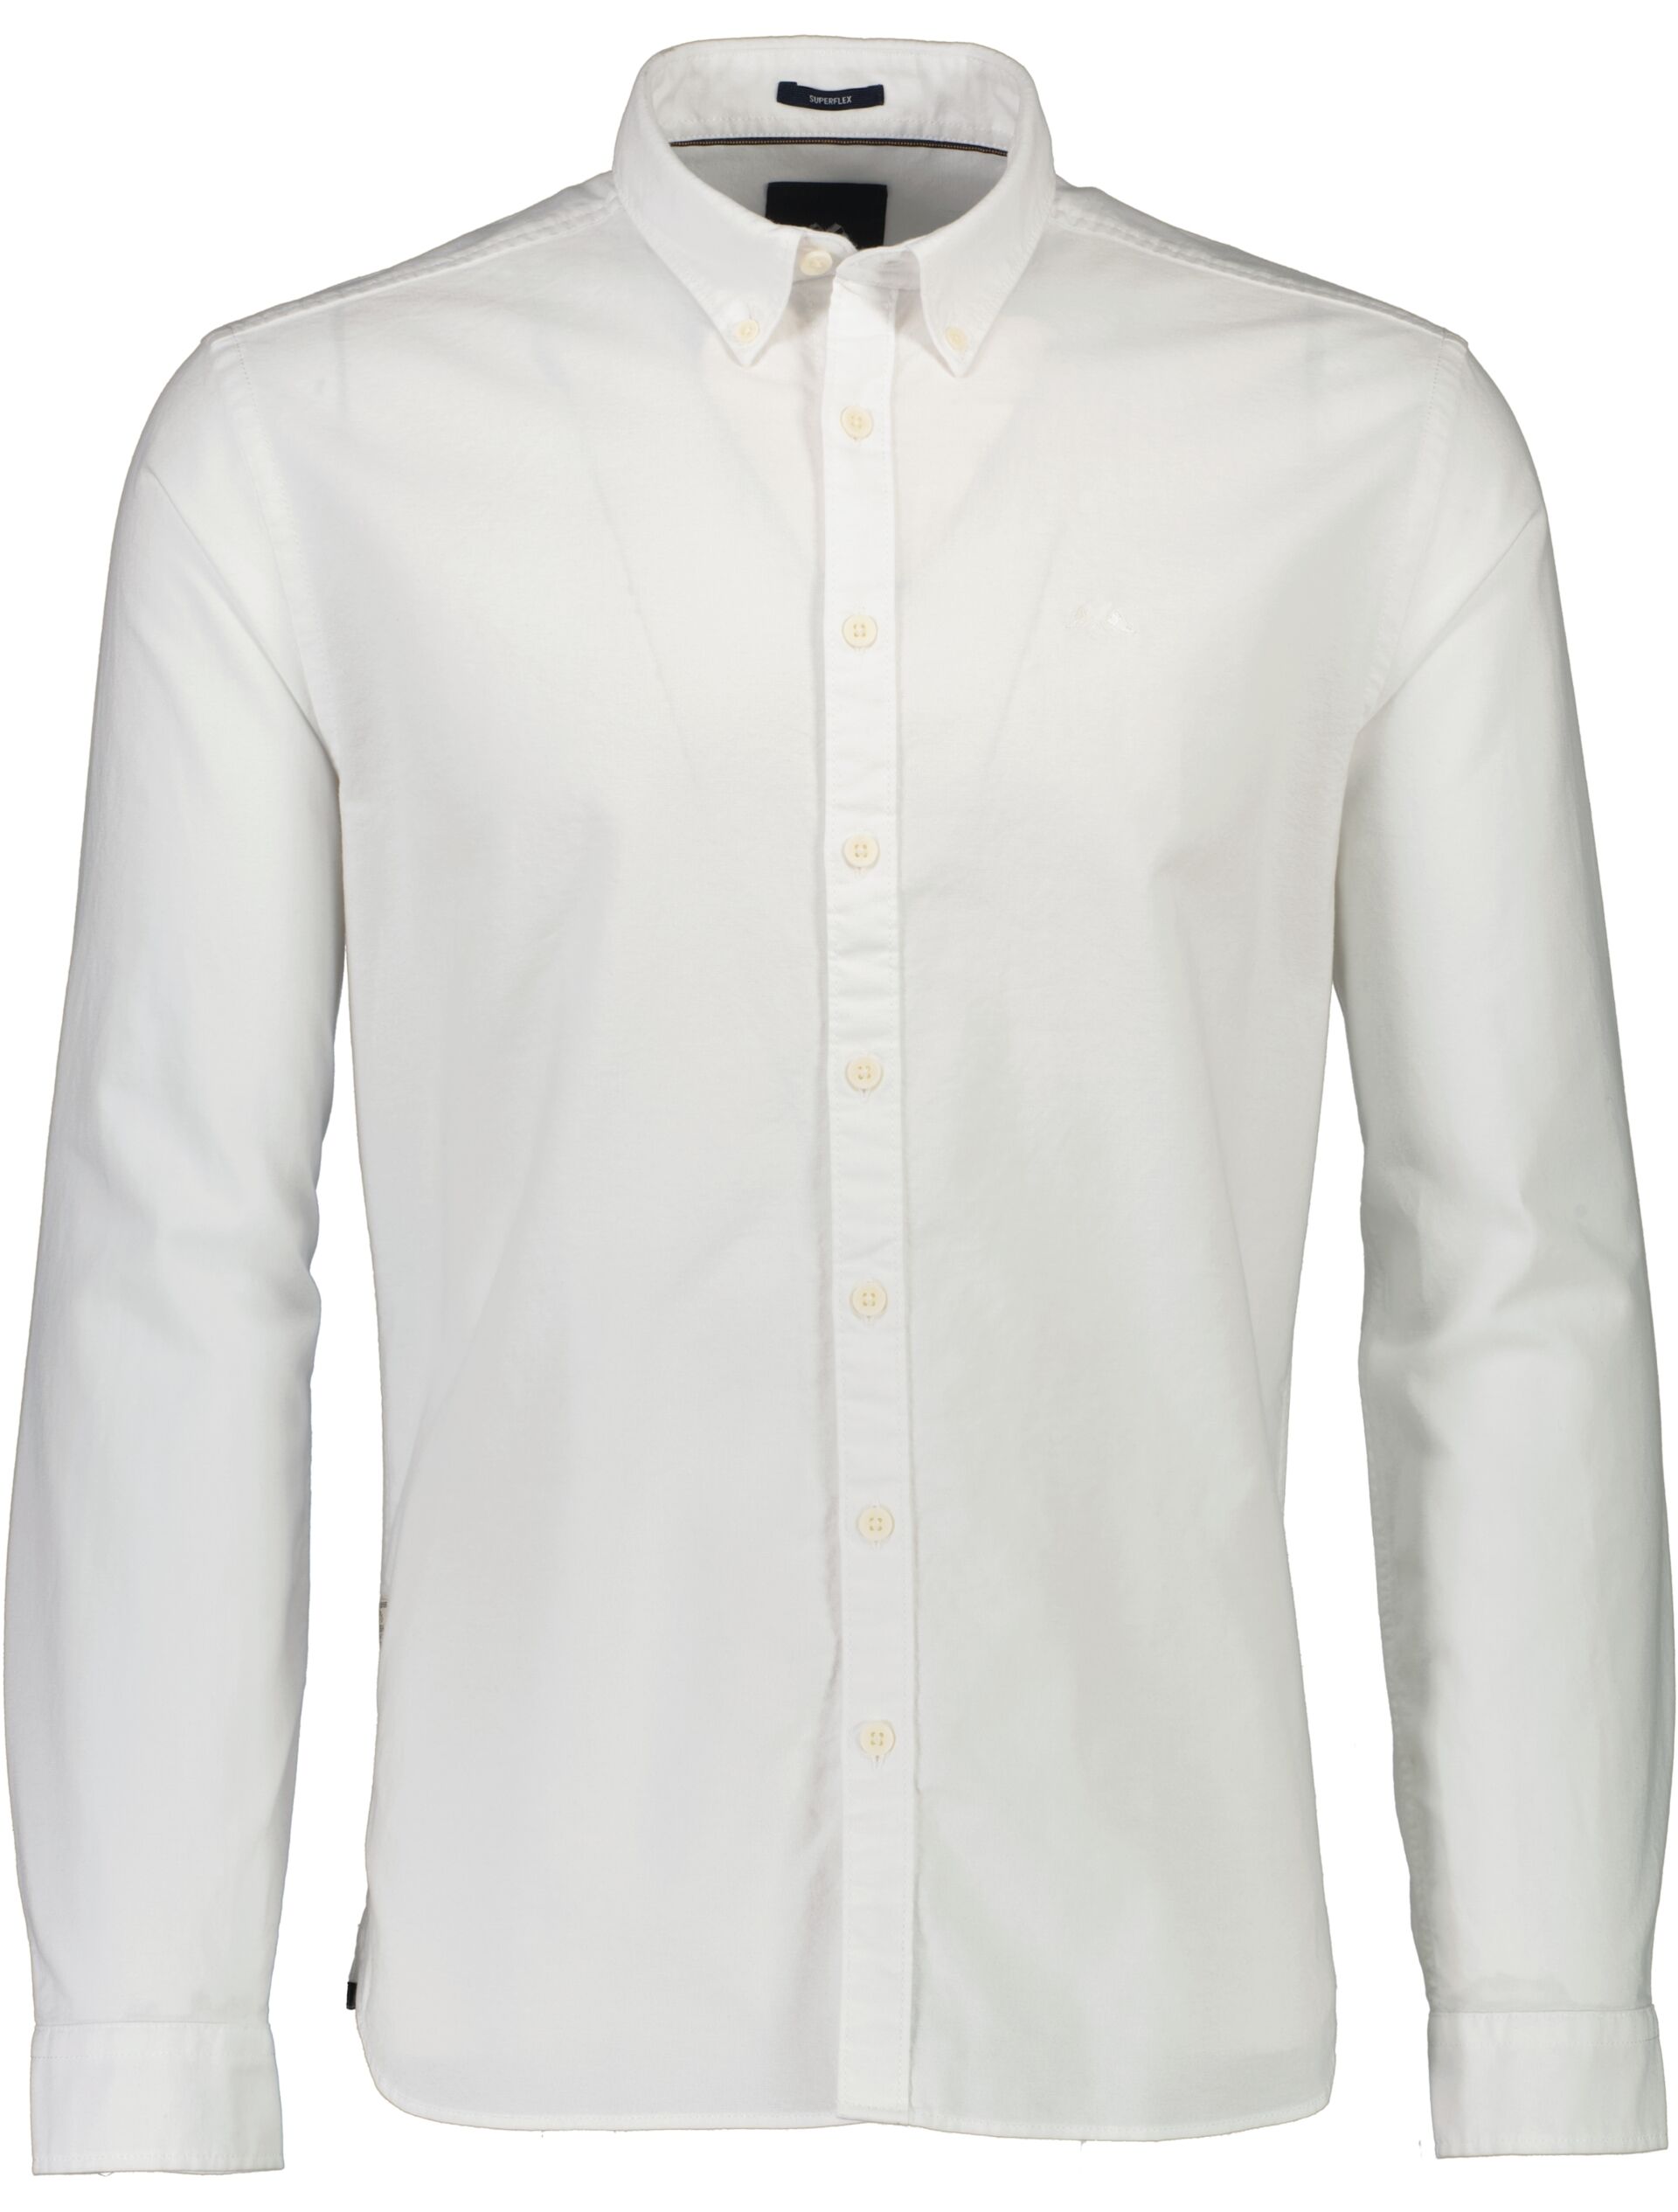 Oxford shirt 30-220076